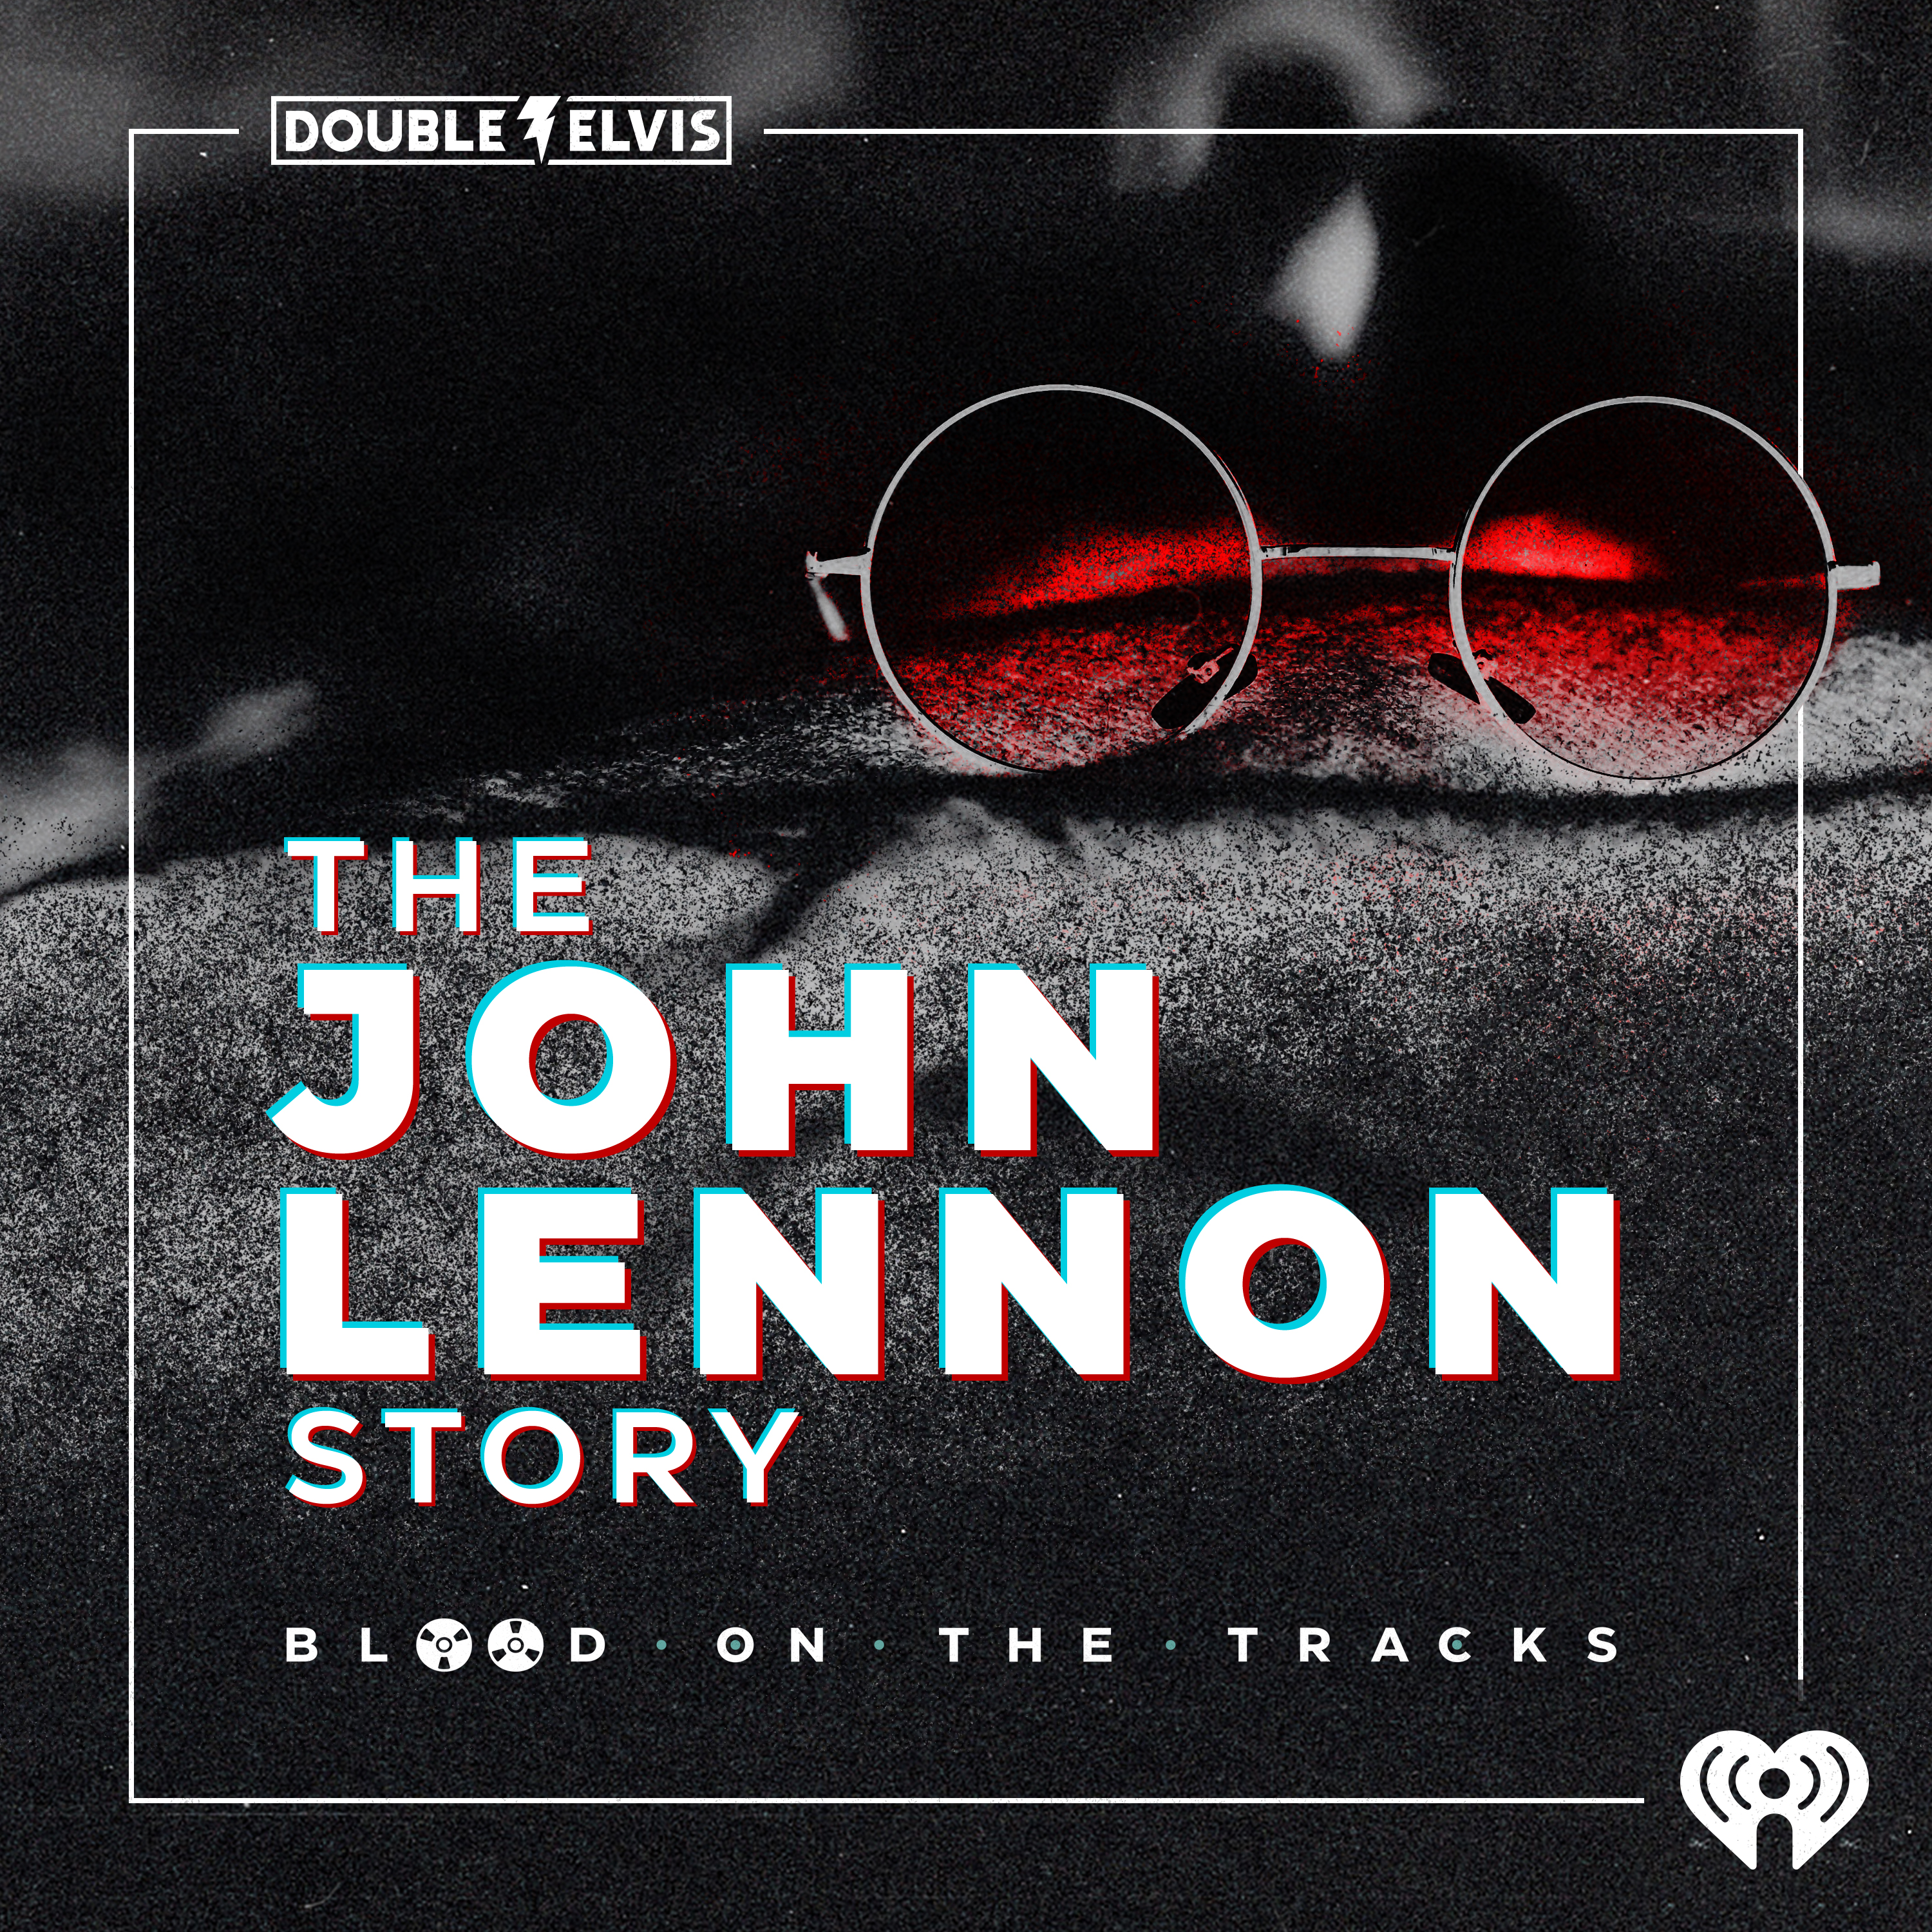 John Lennon & Richard Nixon (The John Lennon Story, Chapter 2)